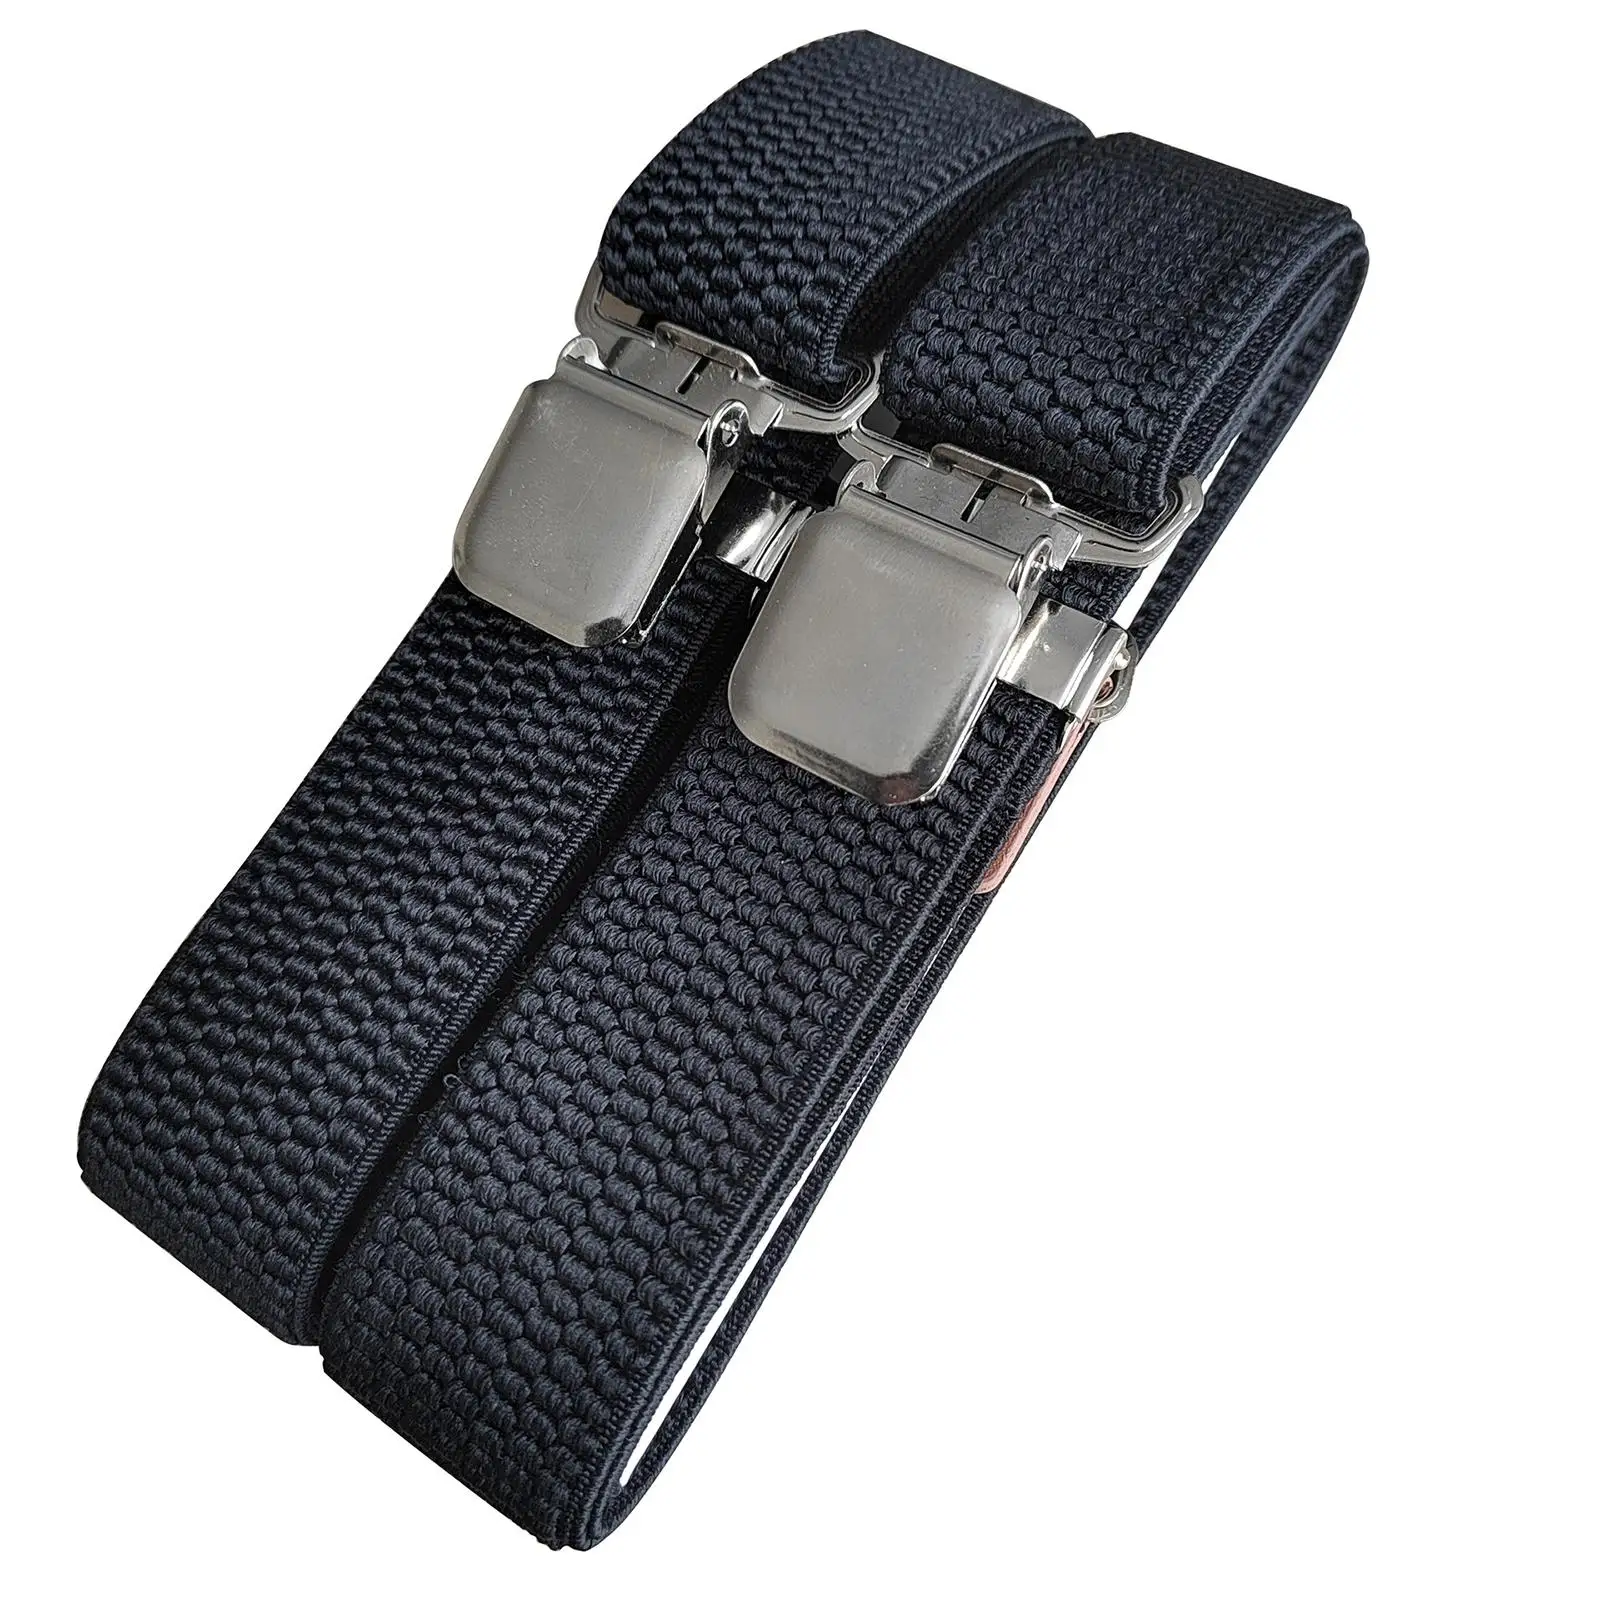 Suspenders for Men, Adjustable Elastic 1.5 inch Wide X Shape Suspenders with Heavy Duty Clips